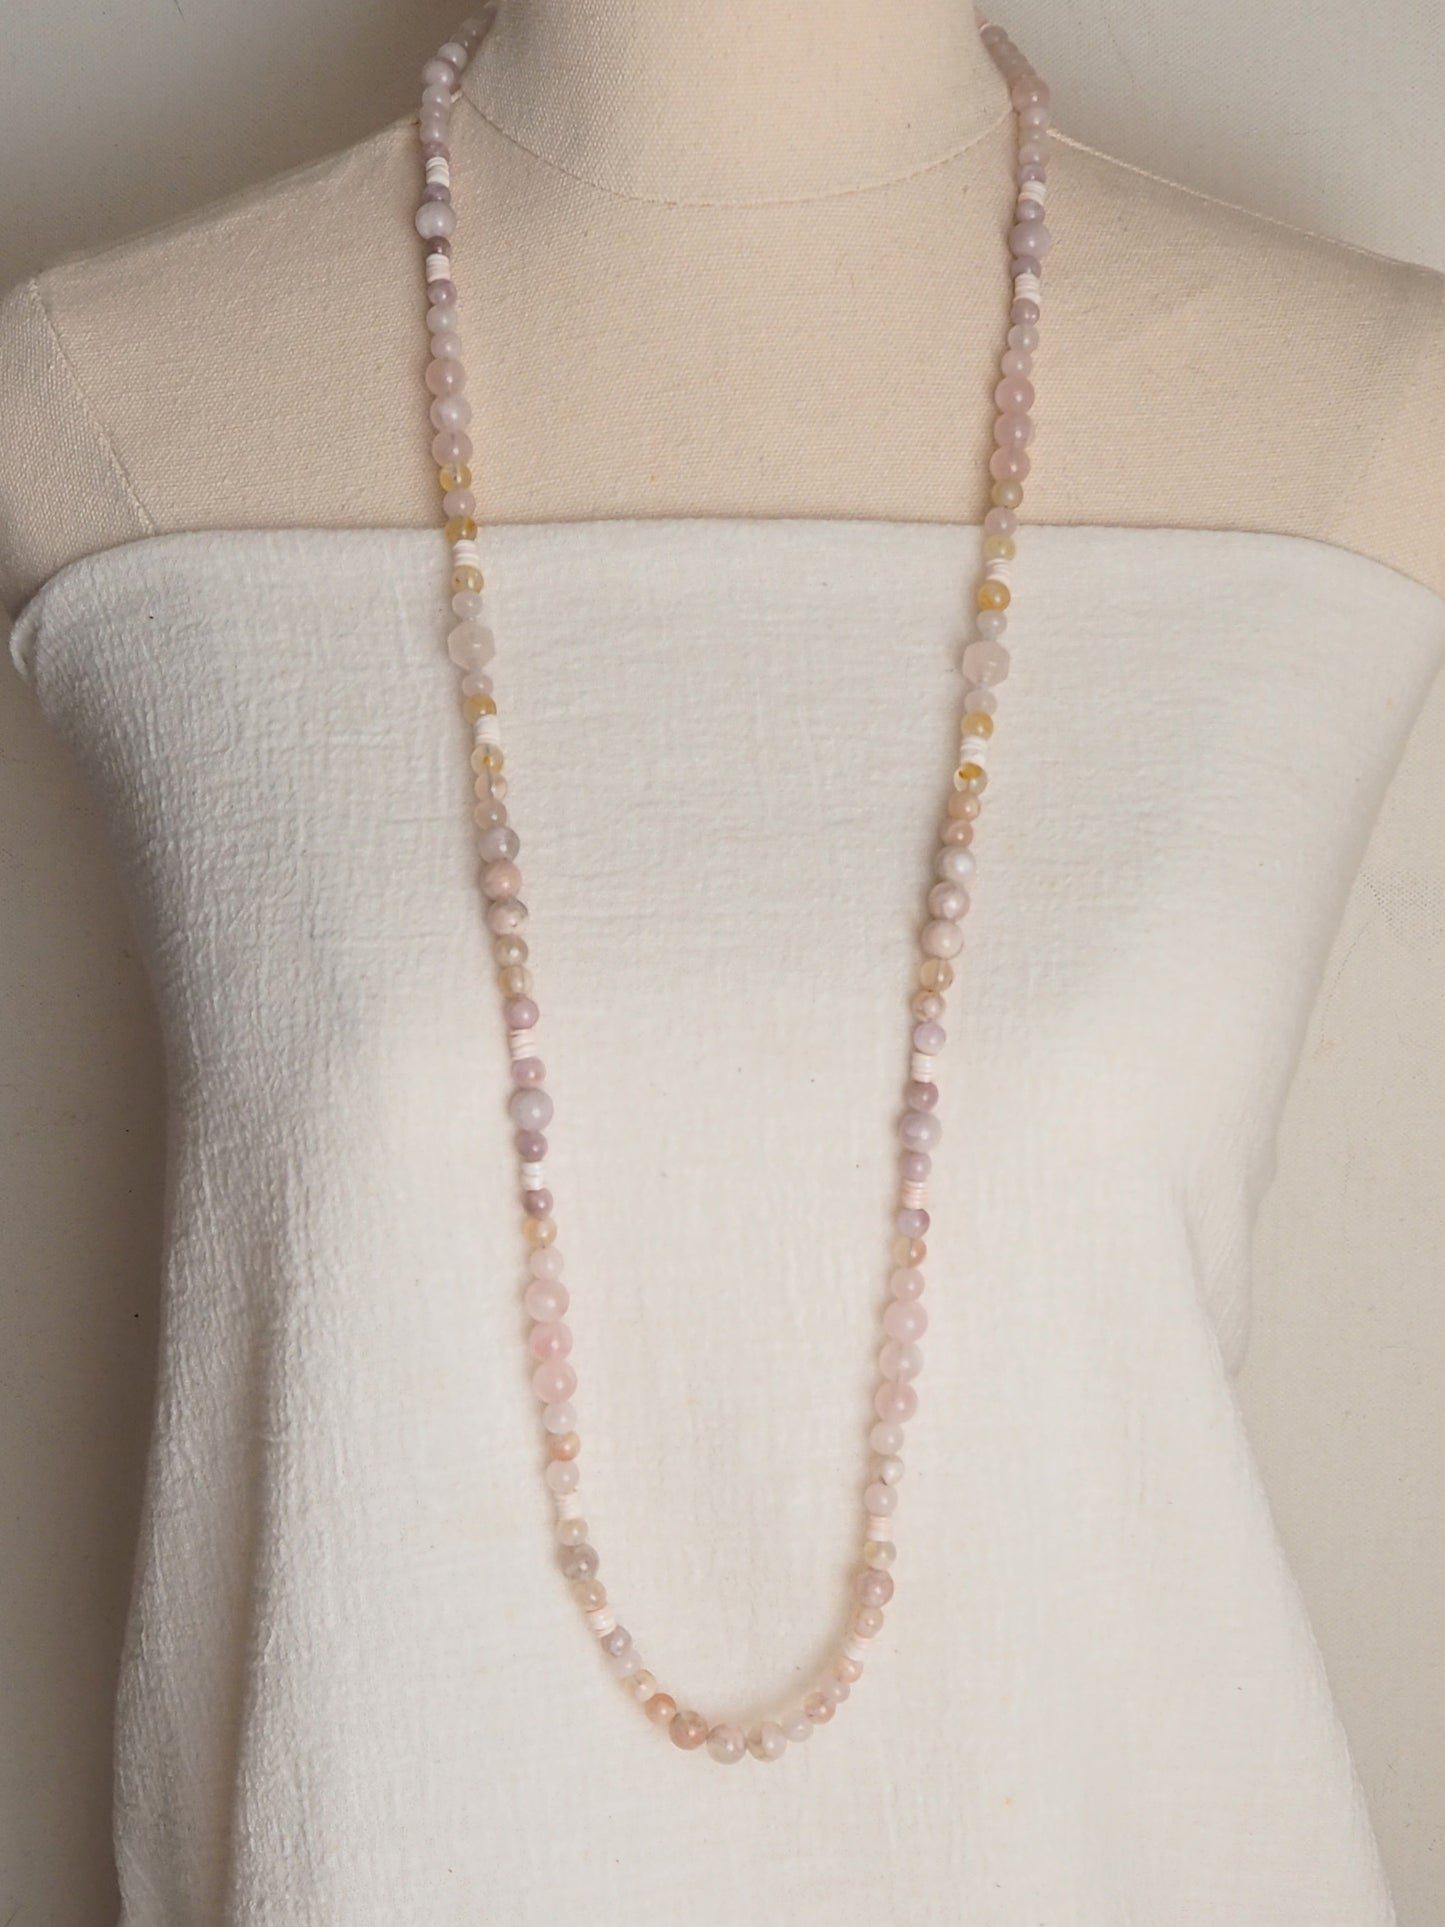 Long OOAK Hand Strung Necklace - Rose Quartz, Sakura (Cherry Blossom) Agate, & Kunzite with Golden Healer Quartz and Luhanos Shell Accents